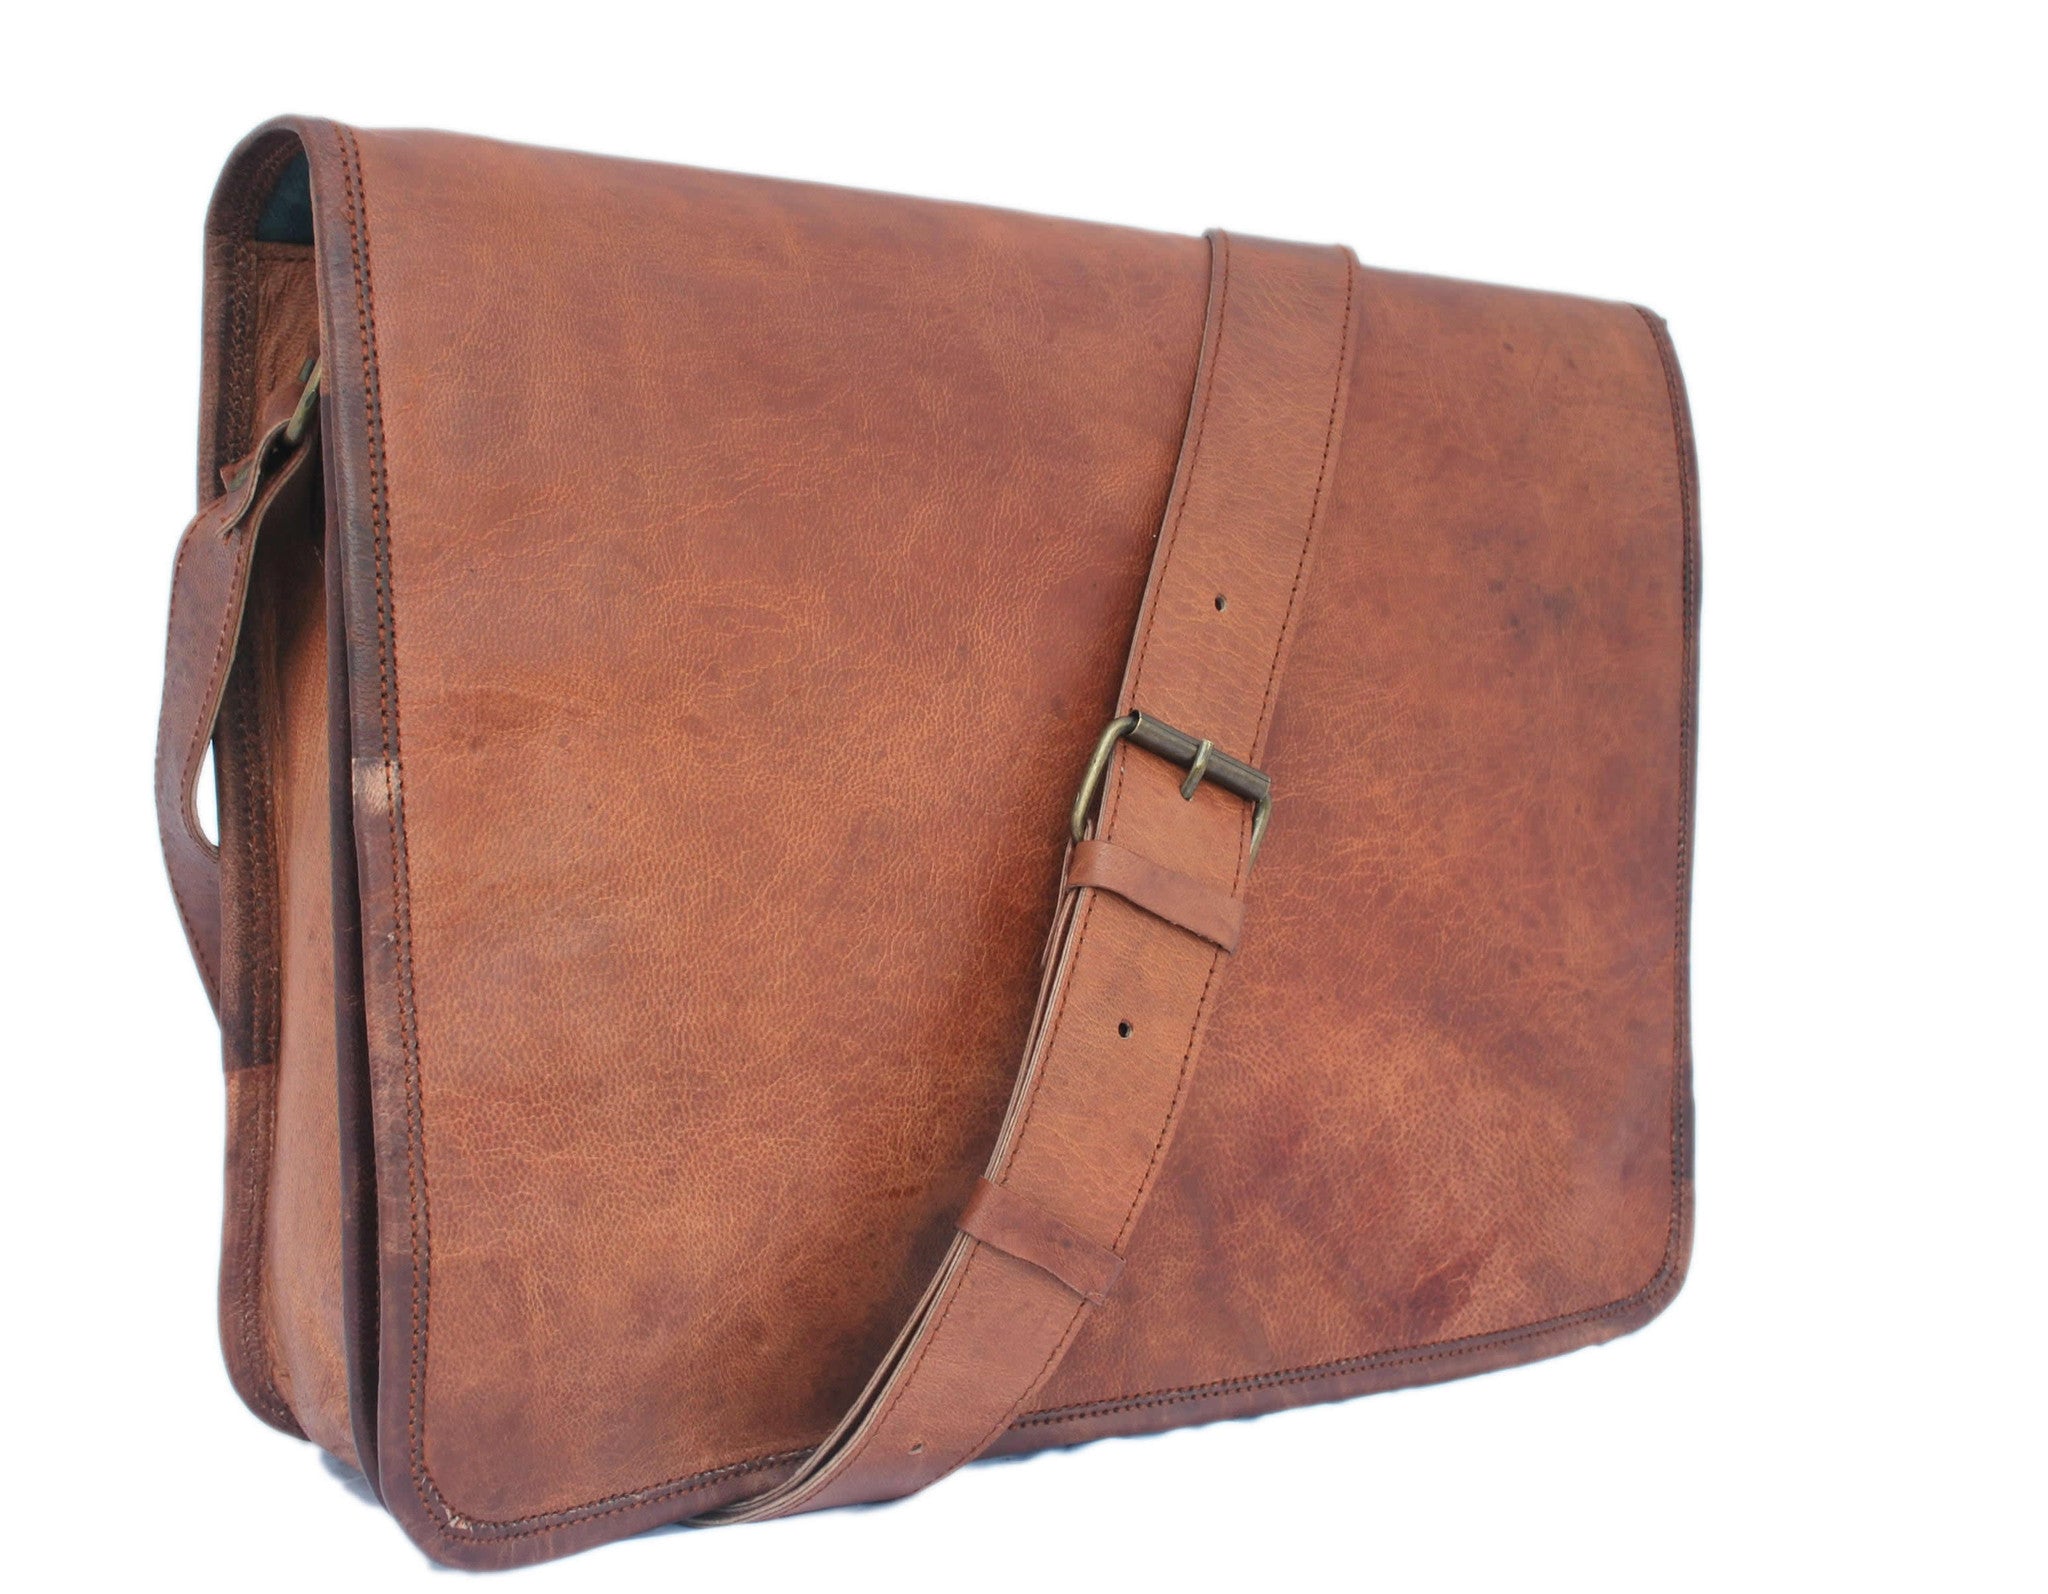 brown leather messenger bag